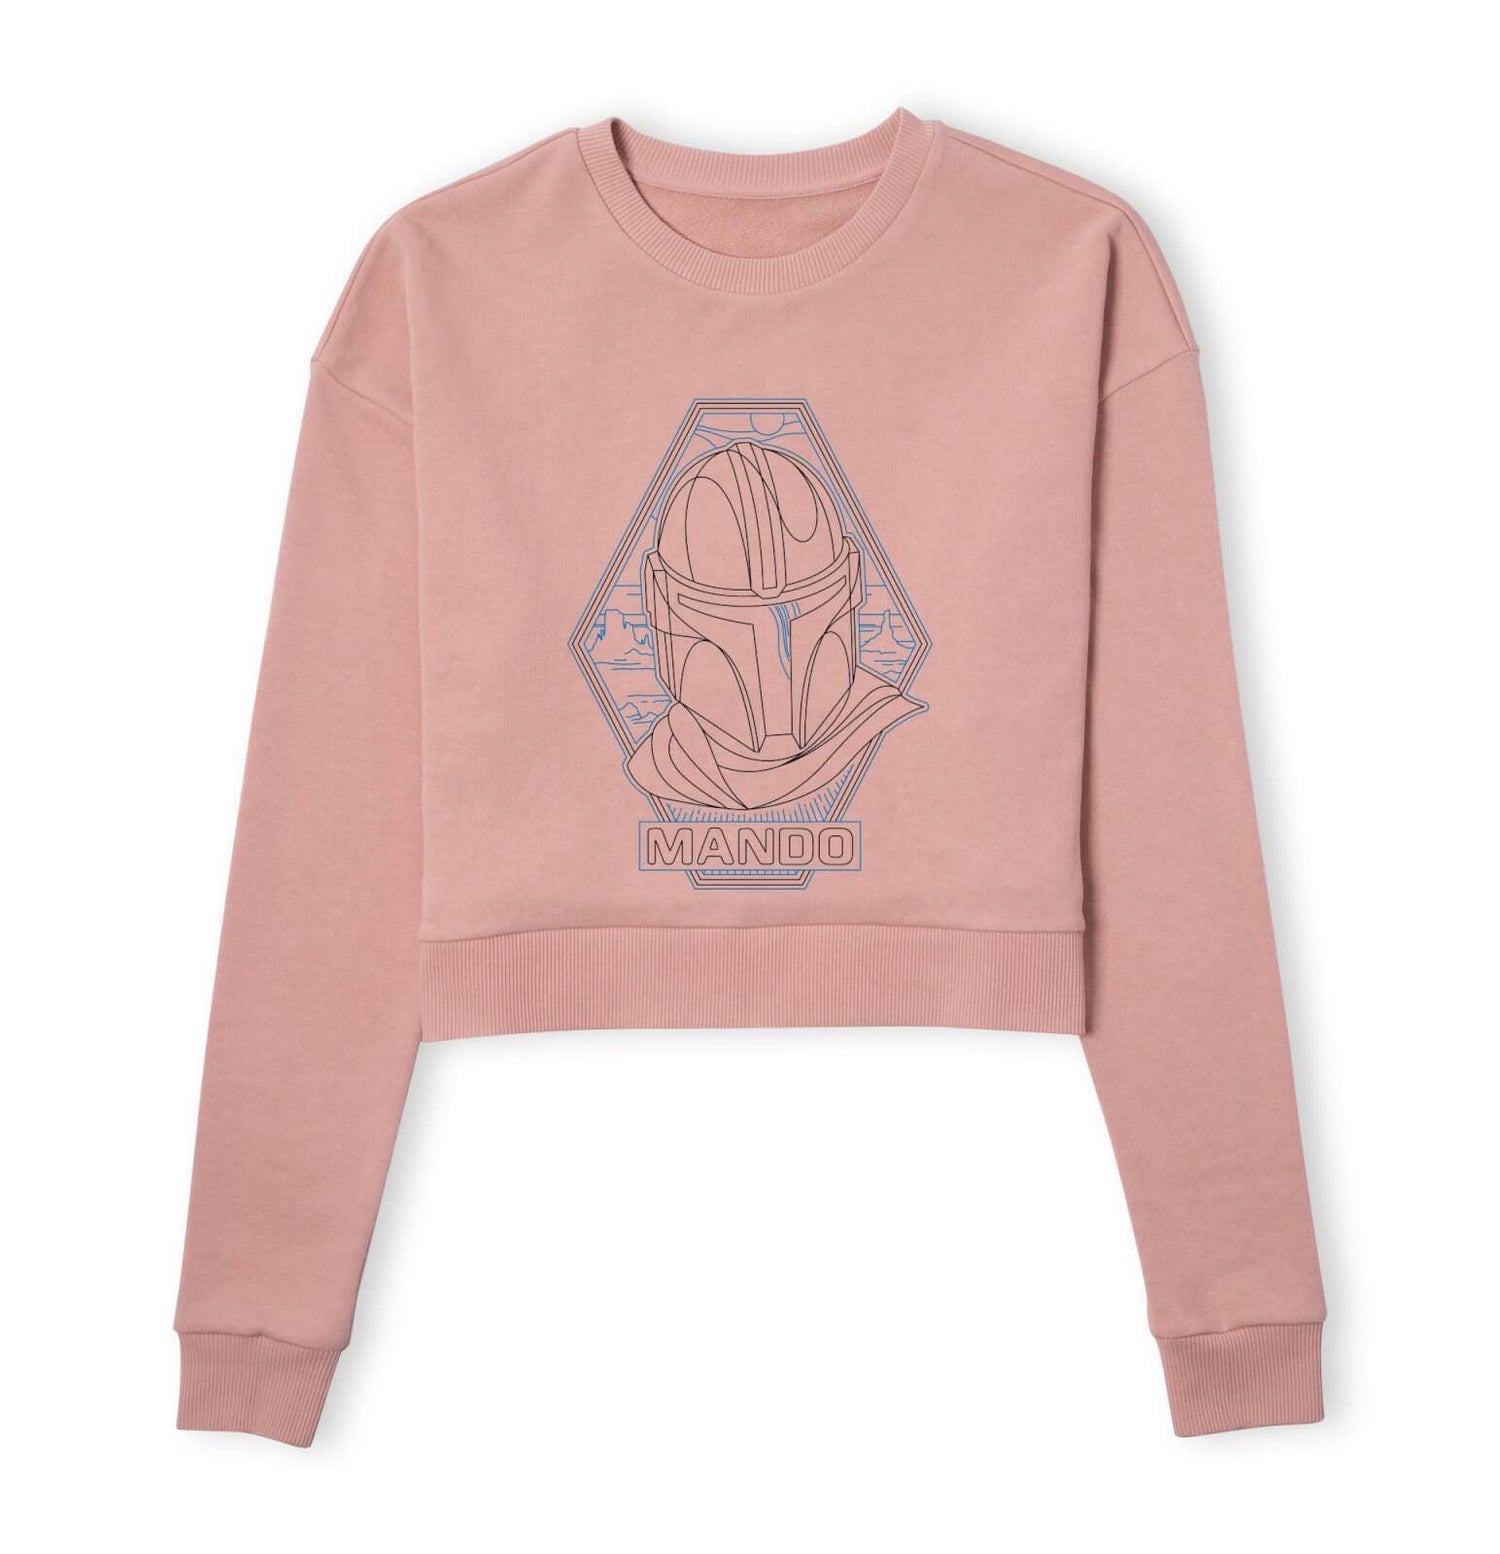 Star Wars The Mandalorian Mando Line Art Badge Women's Cropped Sweatshirt - Dusty Pink